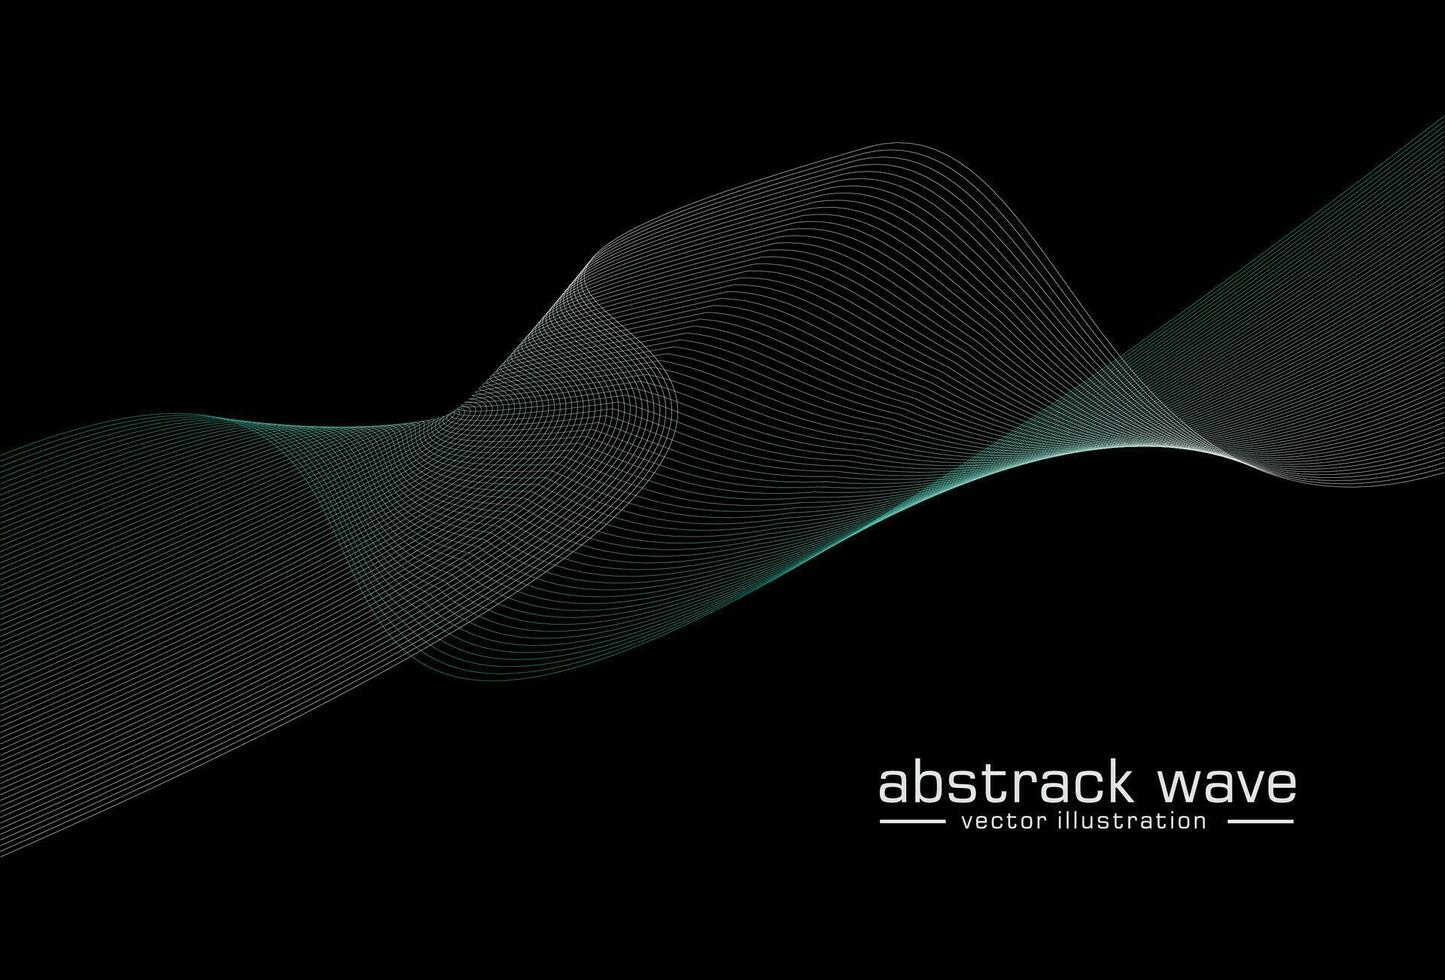 líneas de onda de colores abstractos sobre fondo negro para elementos en presentación de negocios de concepto, folleto, volante, ciencia, tecnología. ilustración vectorial vector